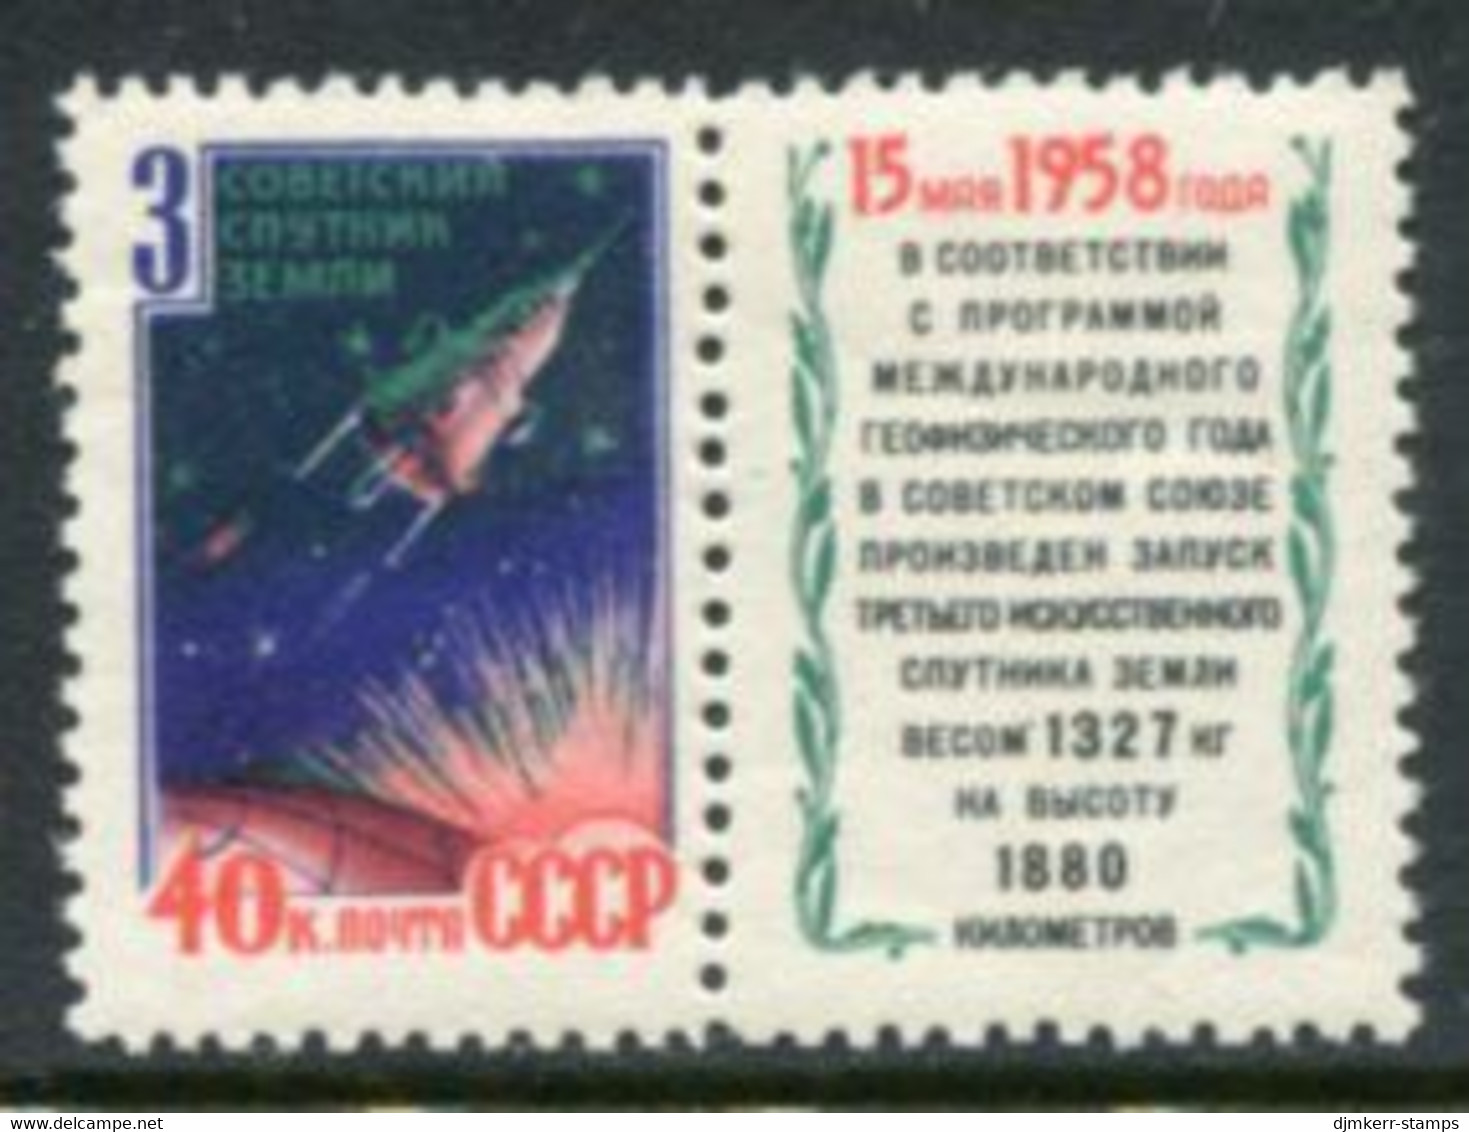 SOVIET UNION 1958 Launch Of Sputnik 3  MNH / **.  Michel 2101 Zf - Unused Stamps